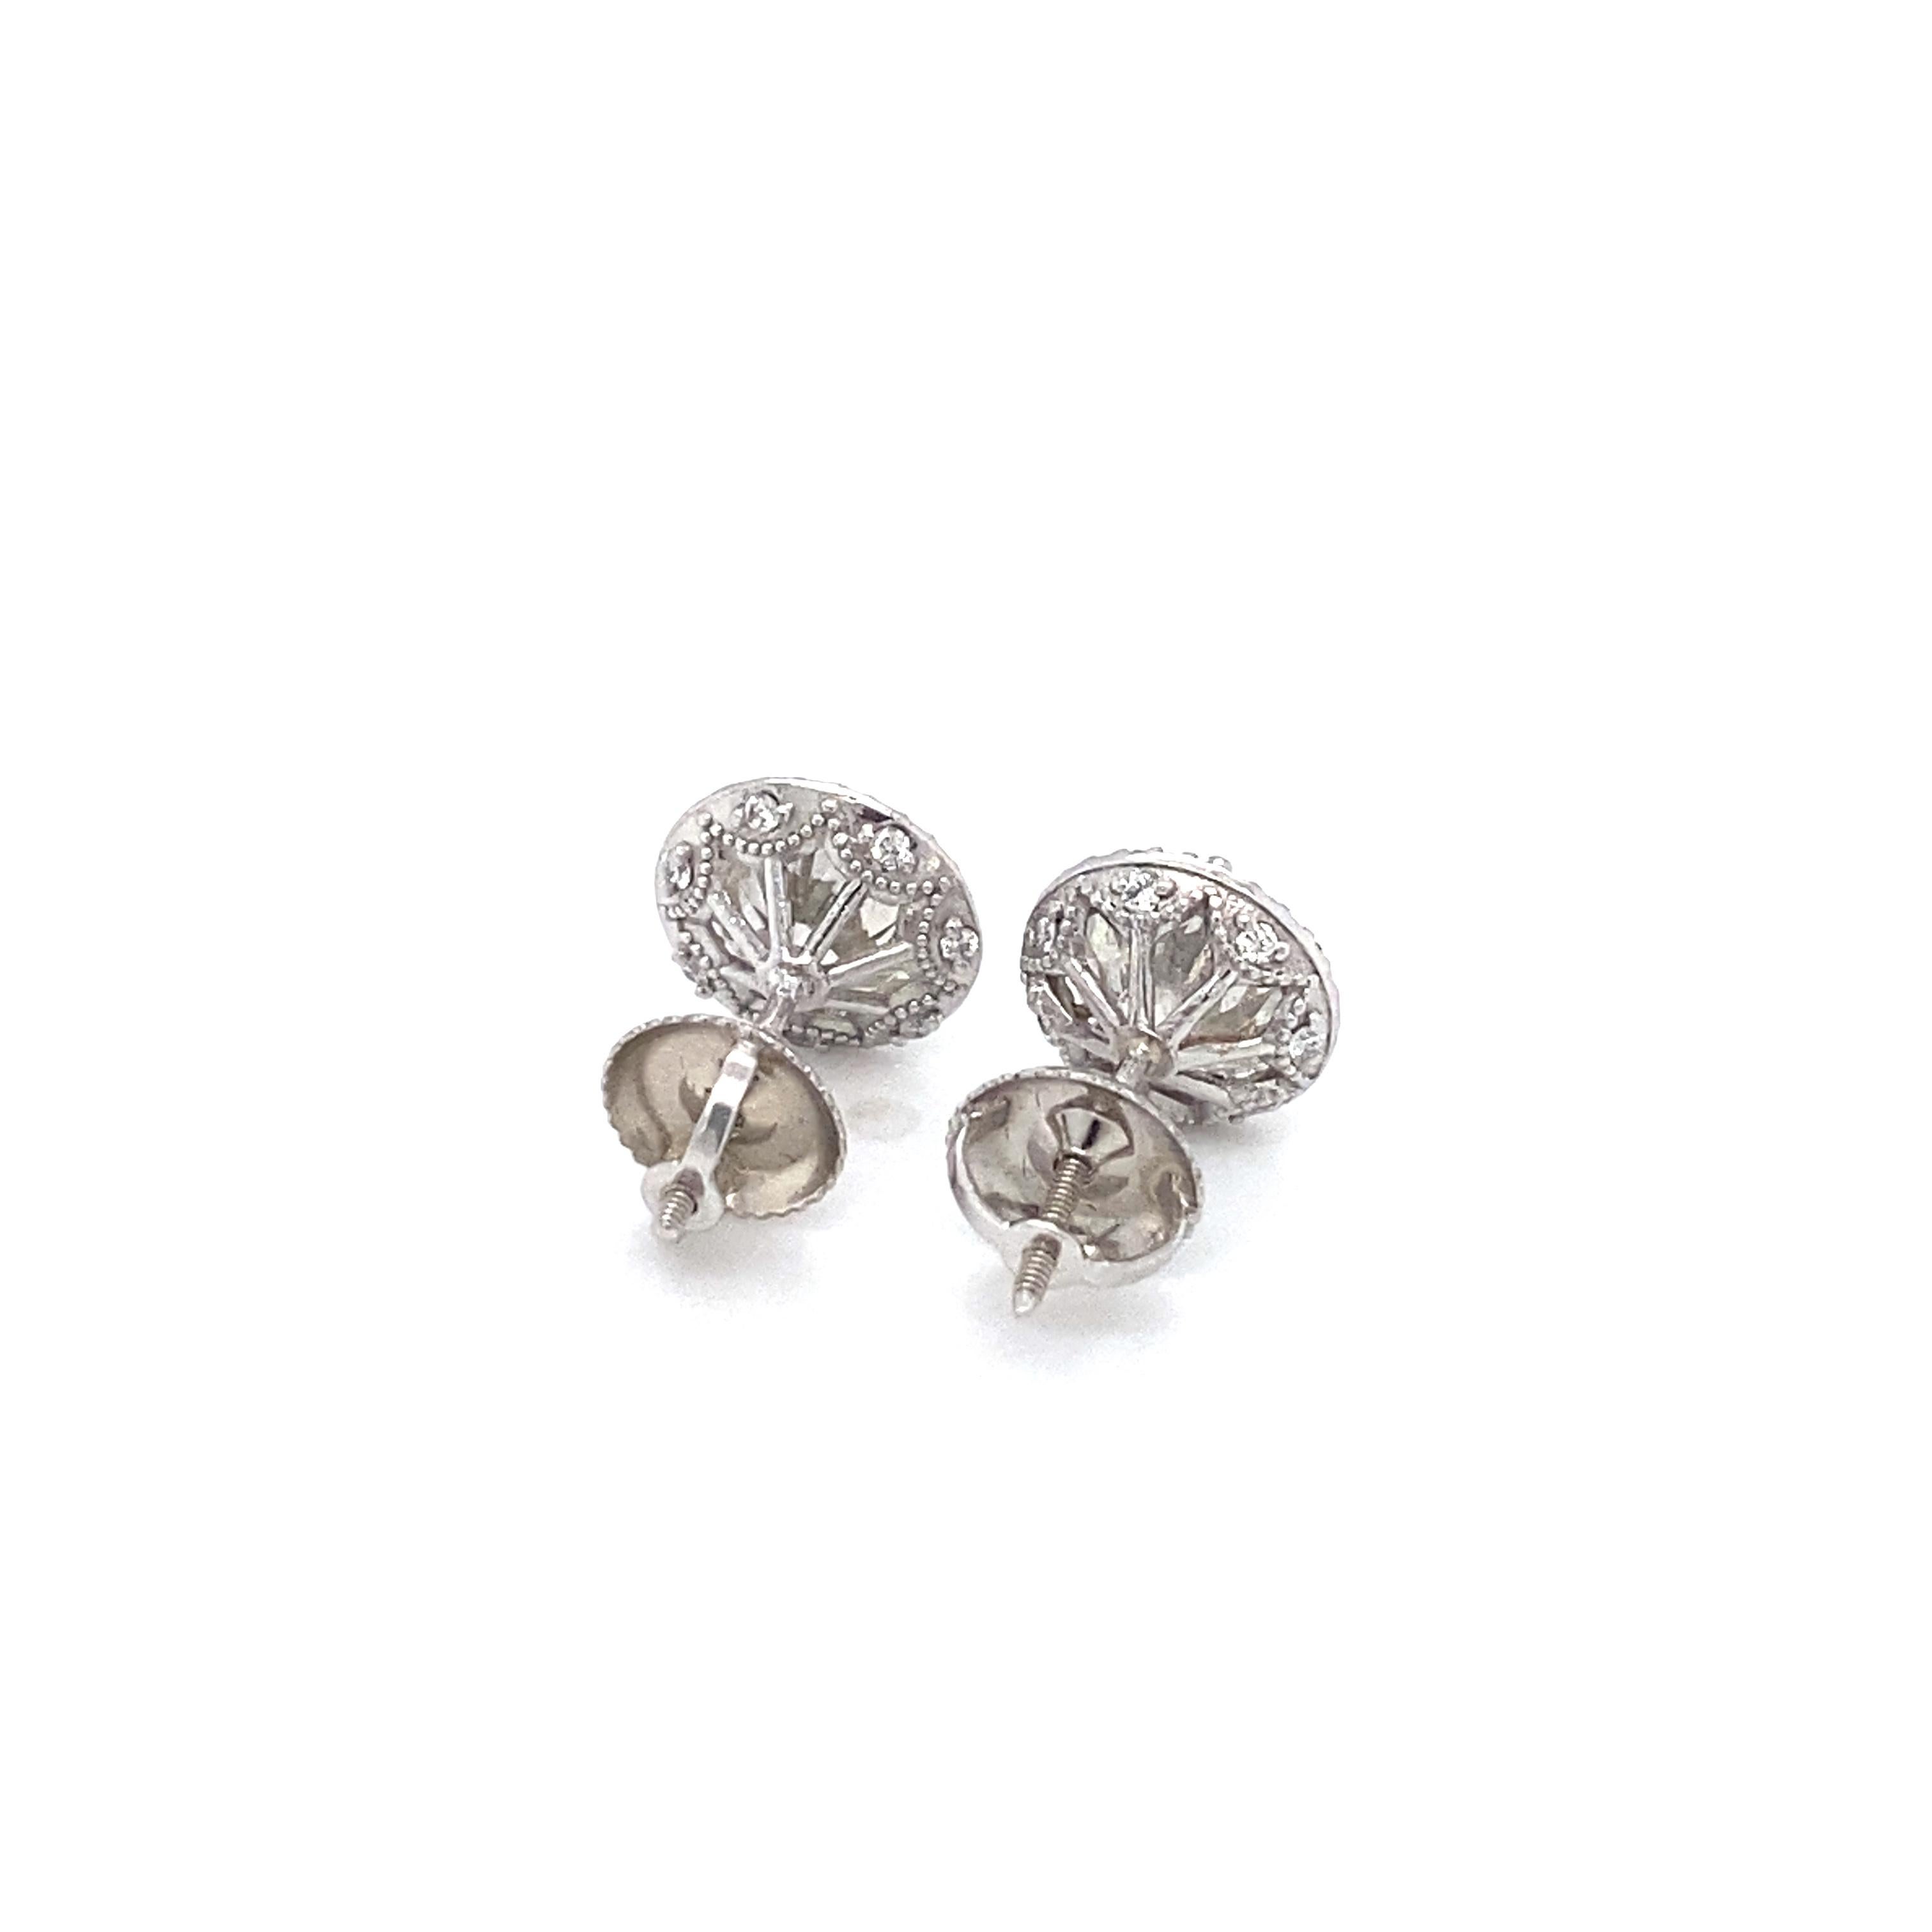 2 carat halo diamond earrings